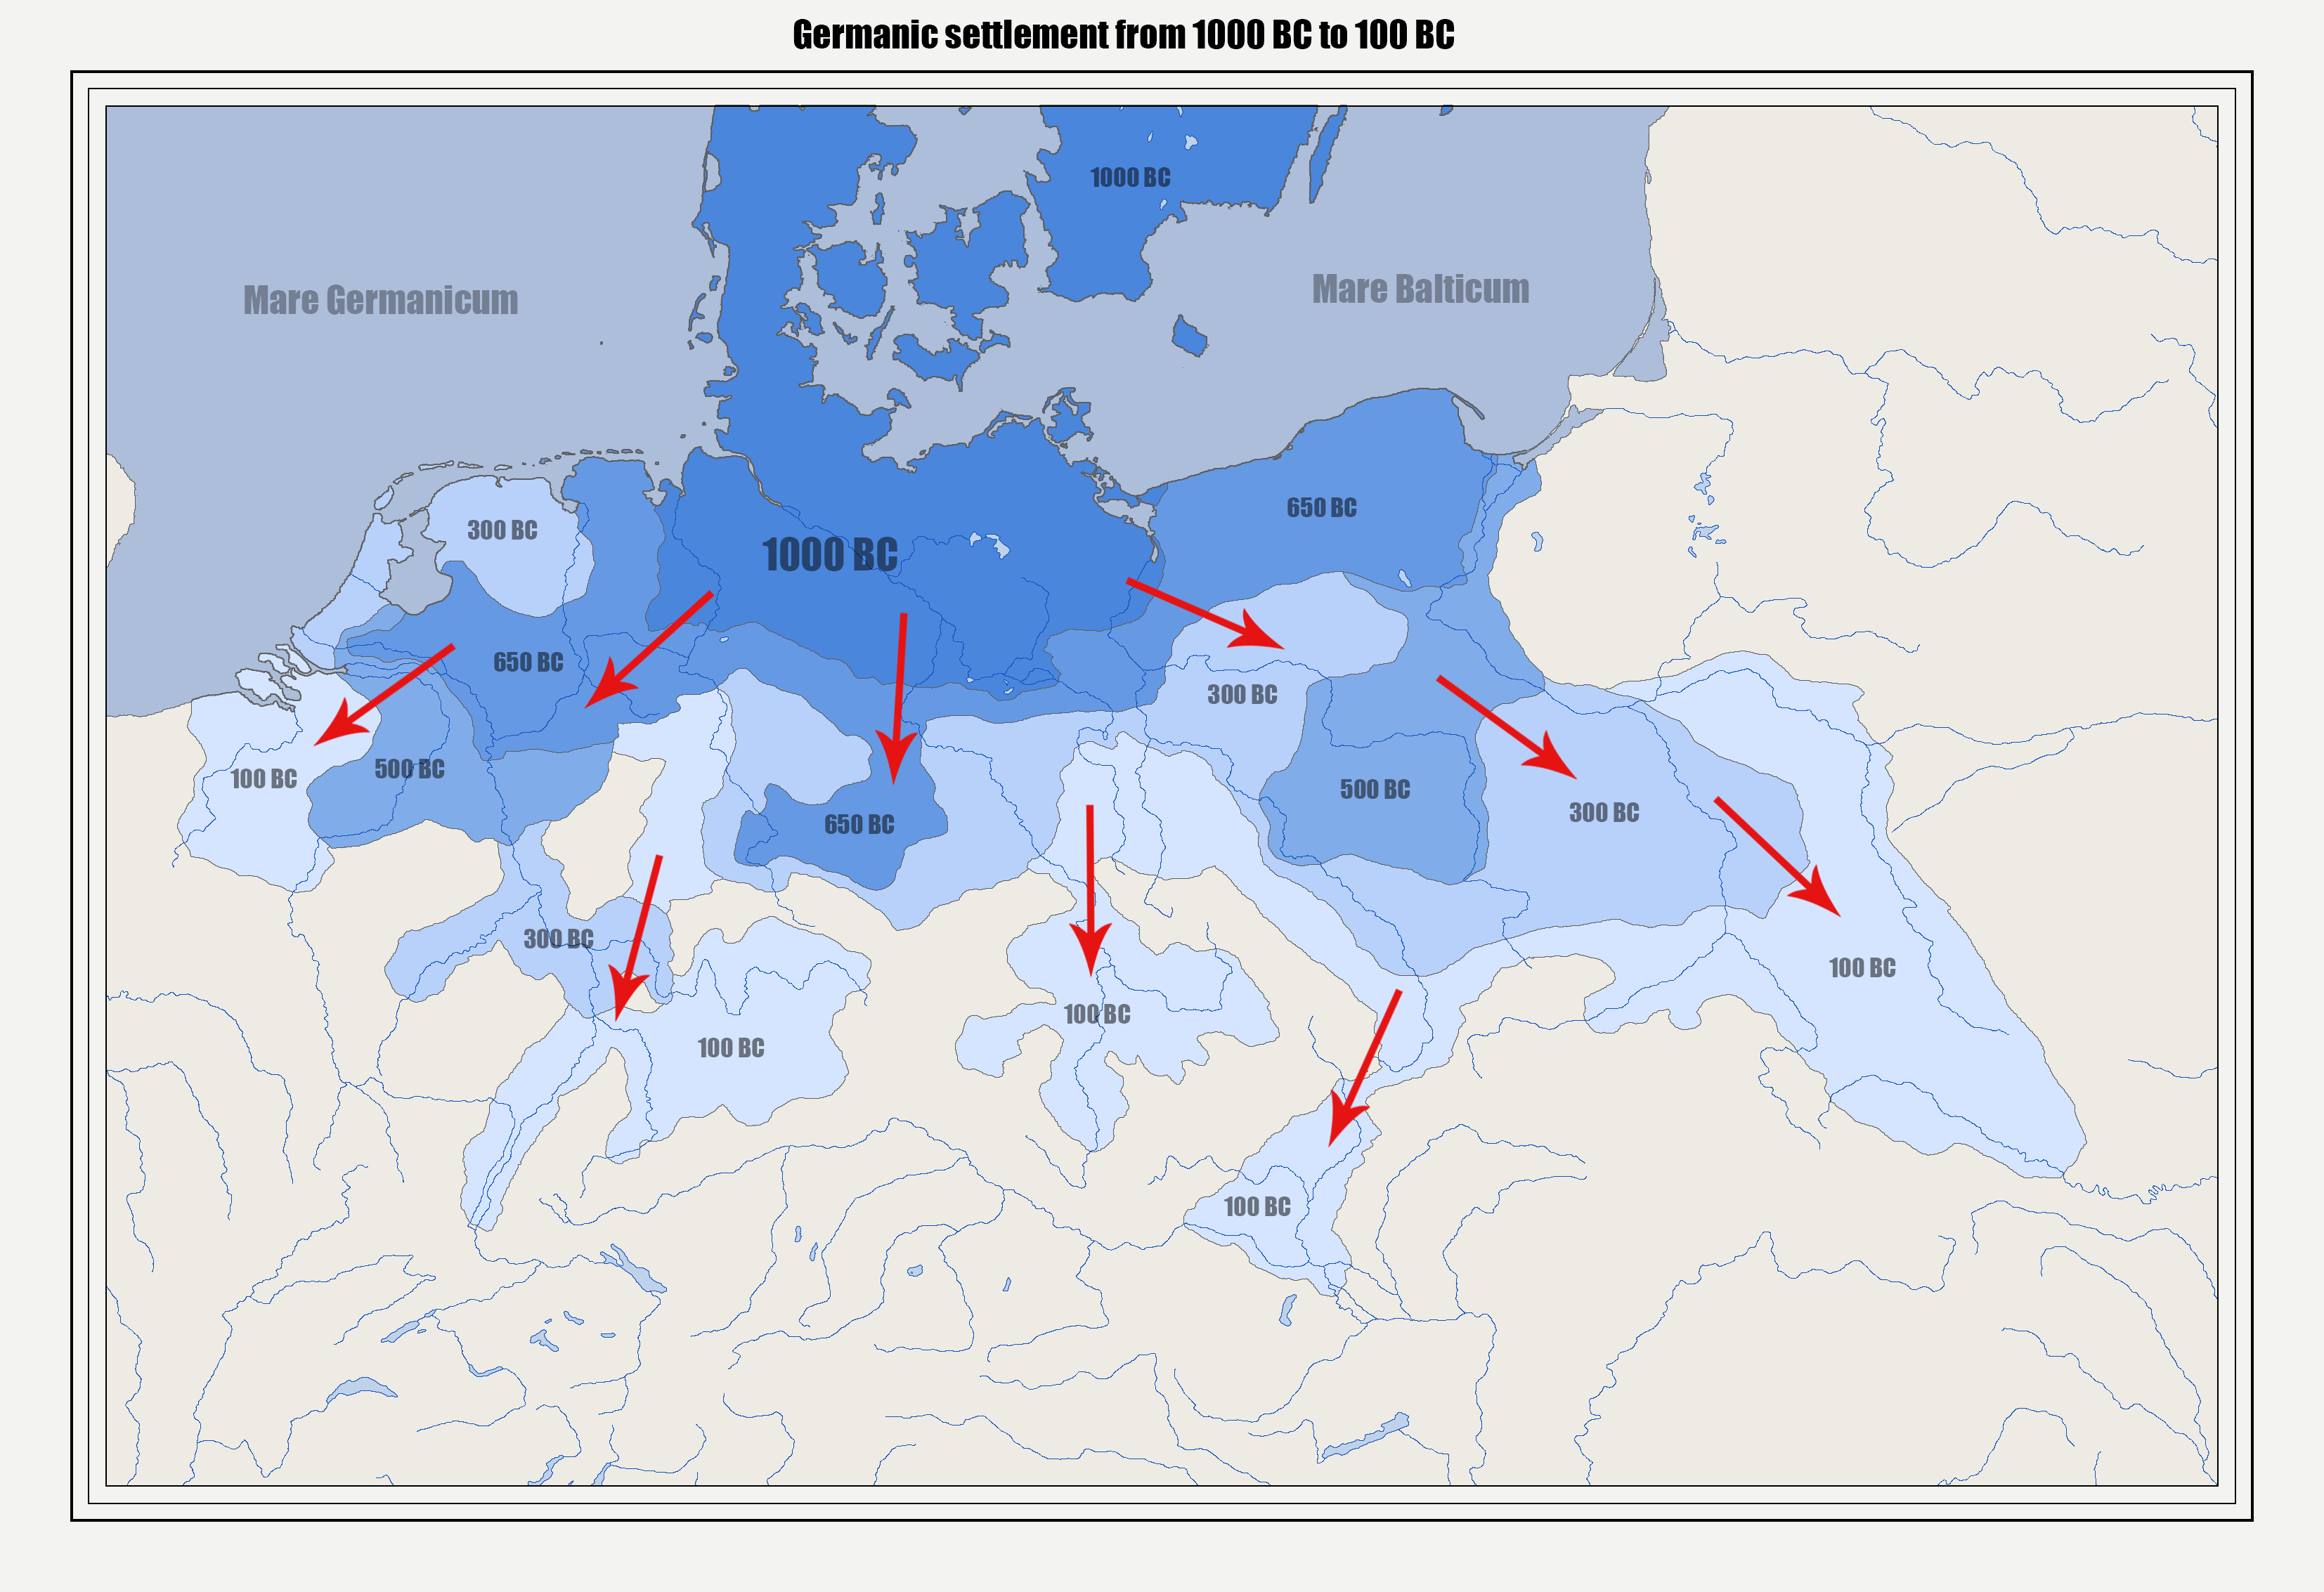 Germanic settlement 1000 BC - 100 BC